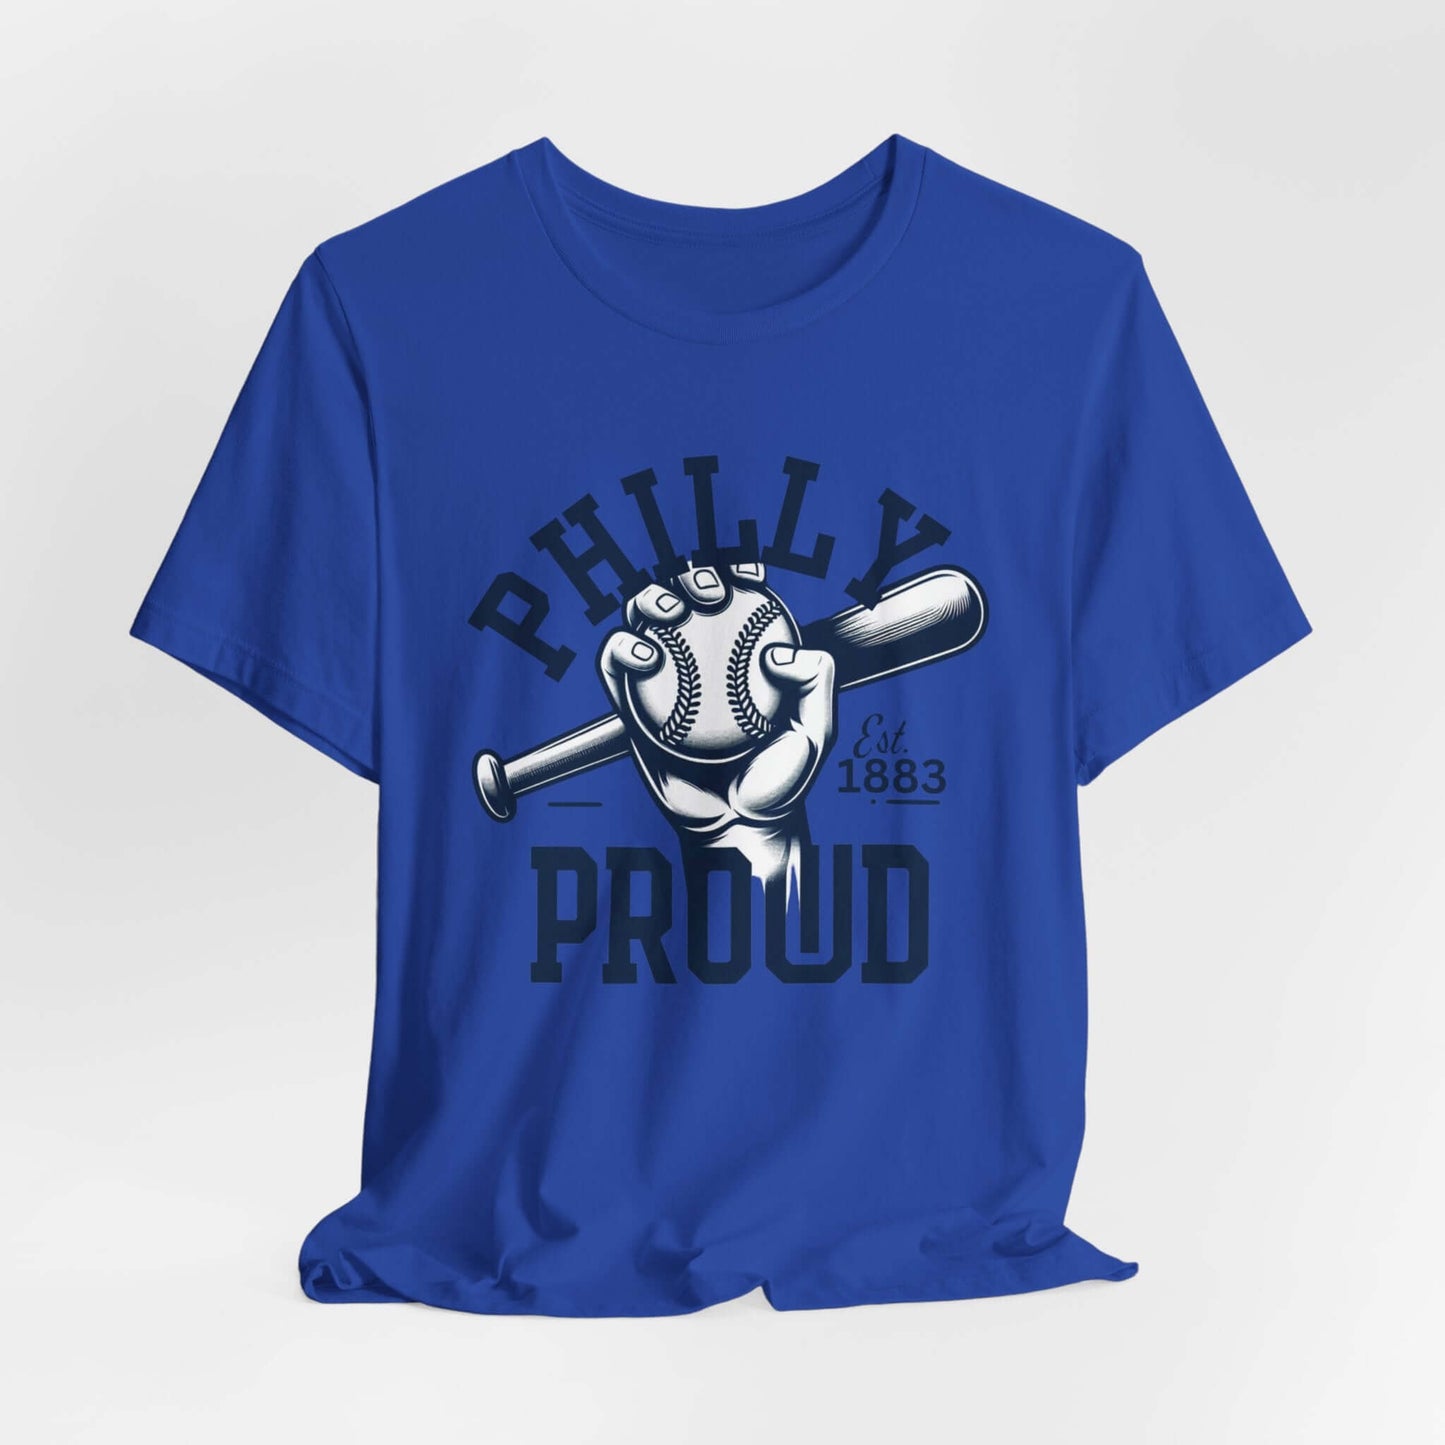 Philly Proud Baseball shirt unisex